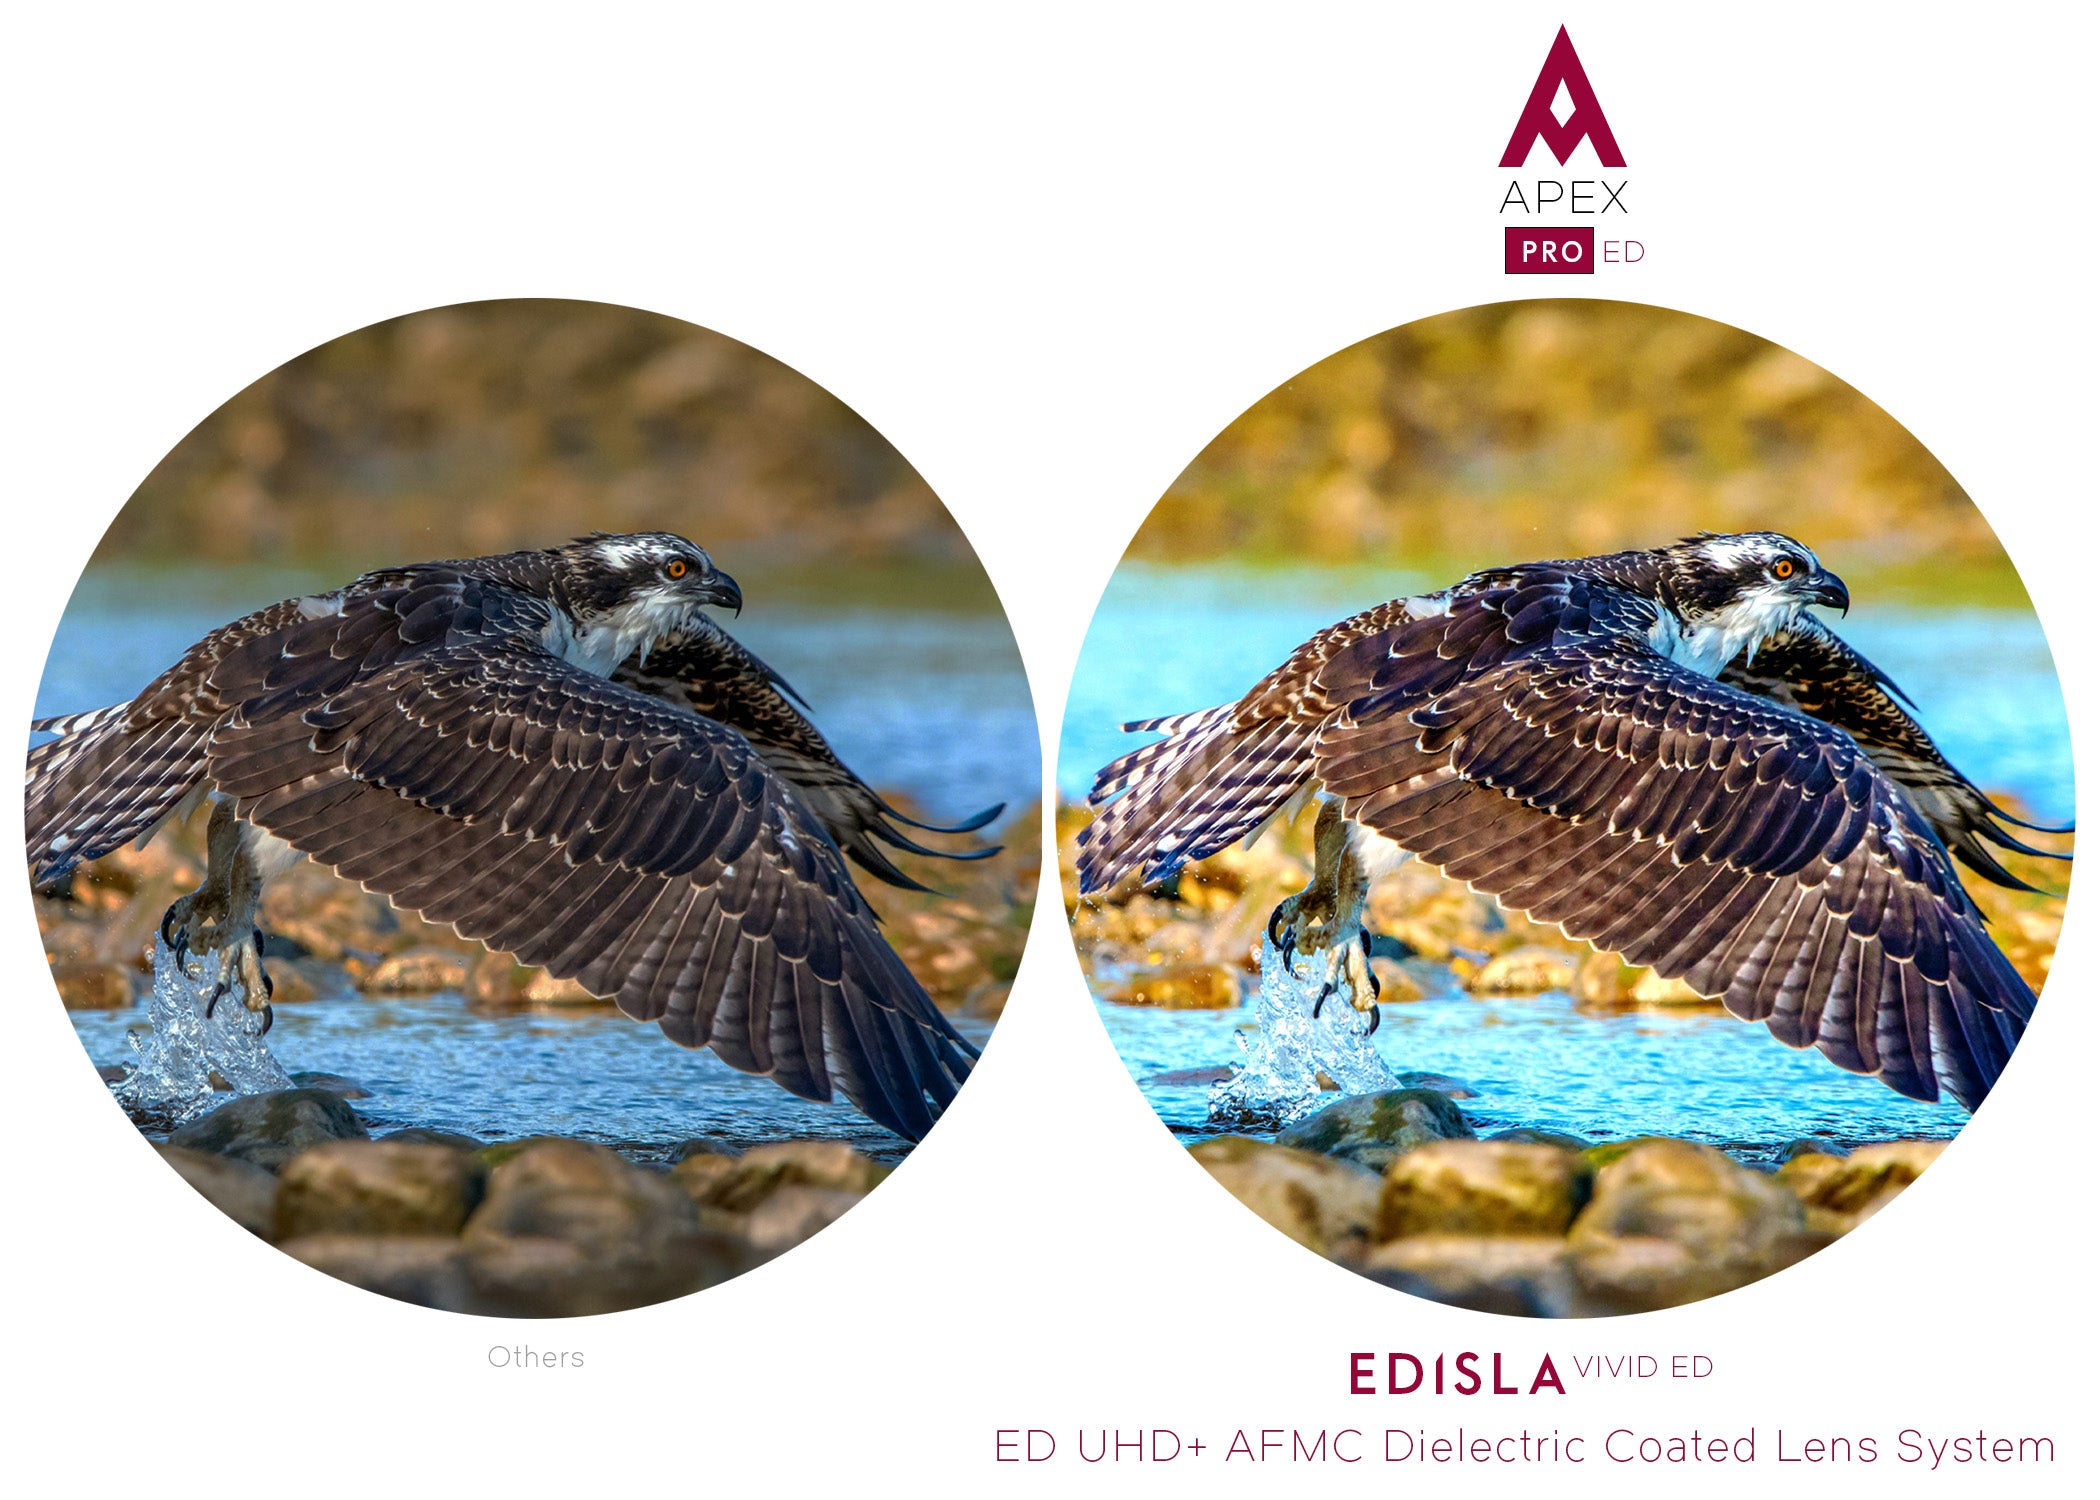 EDISLA Apex PRO ED Binocular UHD 8x42 - EDISLA